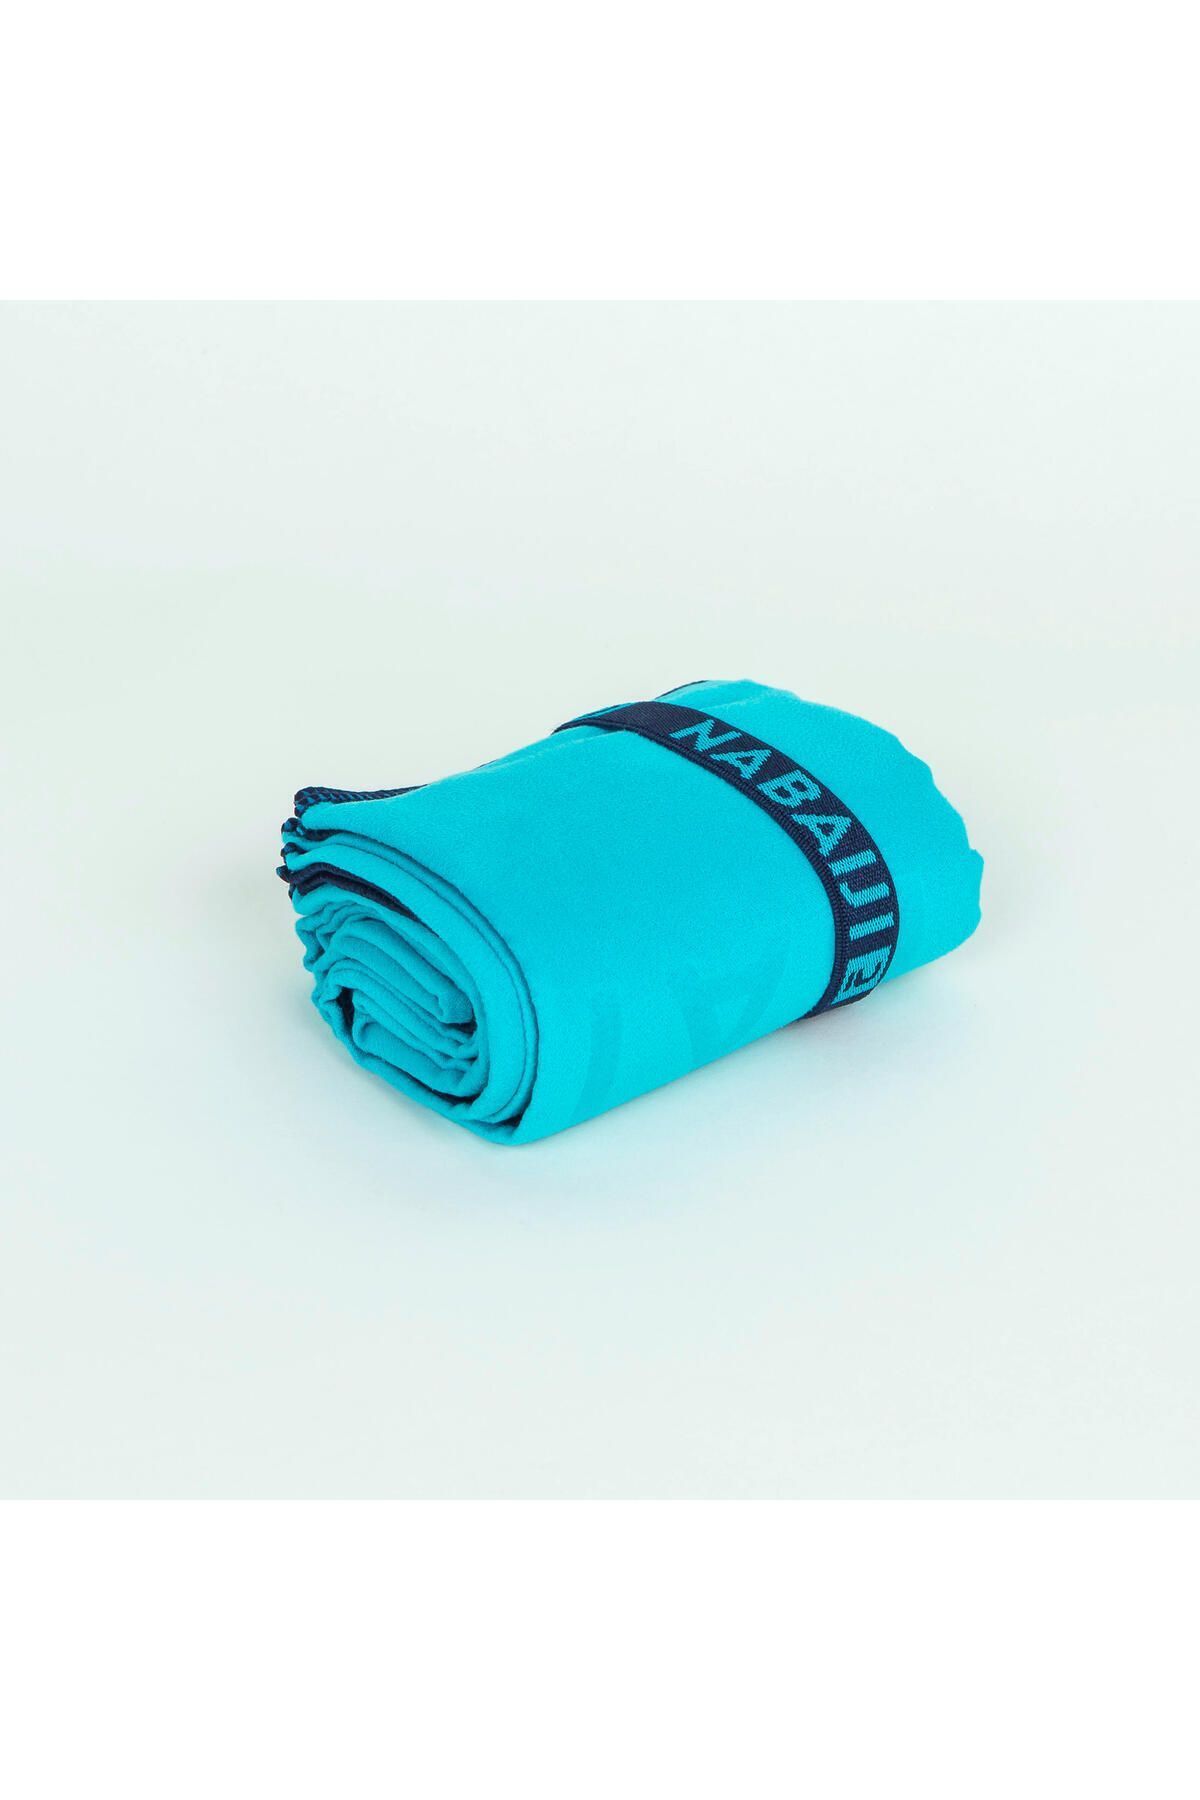 Decathlon Nabaiji Çift Taraflı Mikrofiber Havlu - M Boy - Mavi / Yeşil 60 X 80 Cm